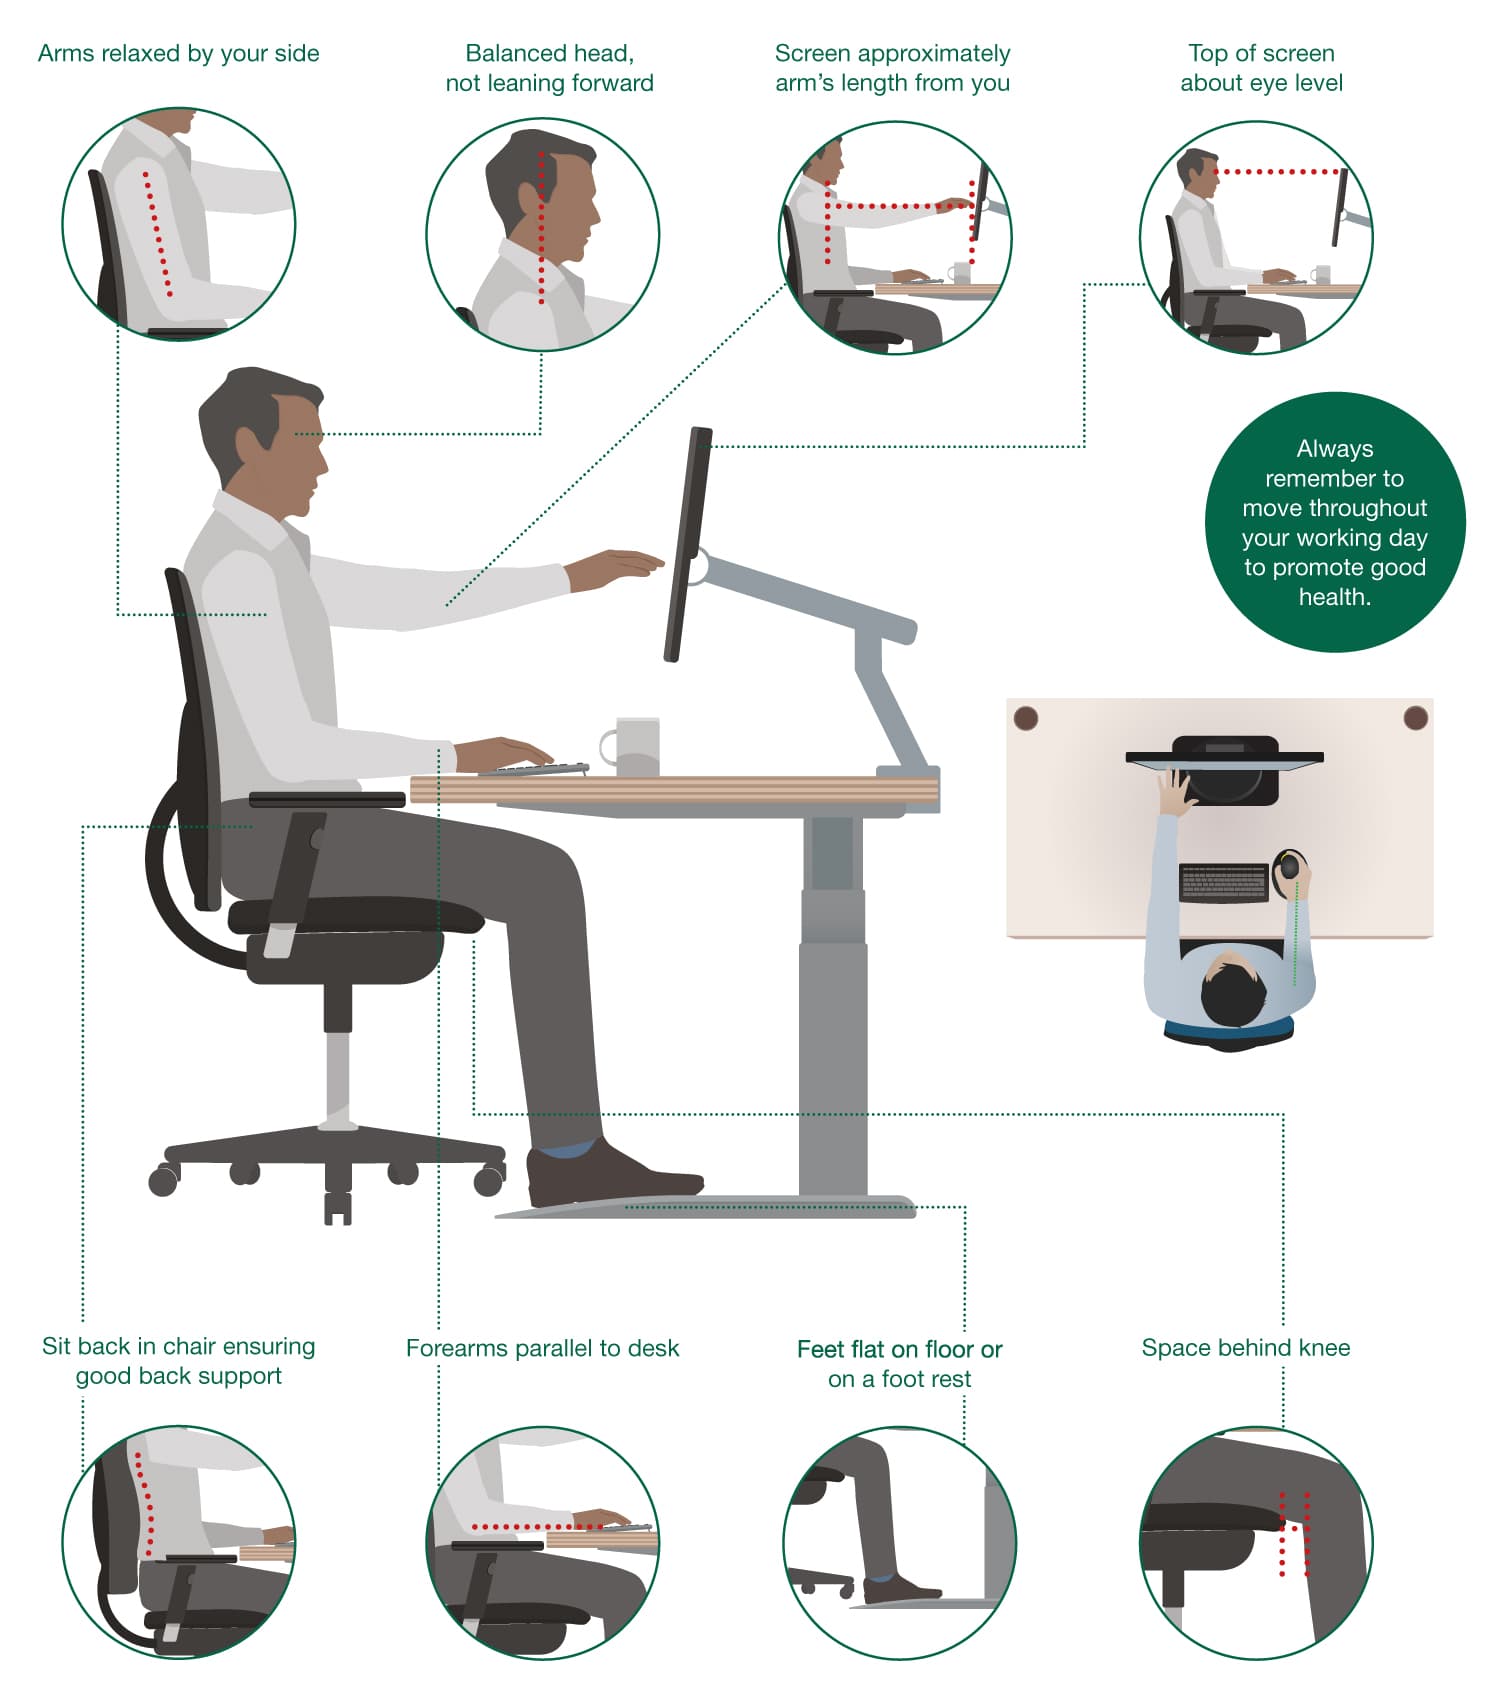 How to arrange your screens and equipment according to ergonomic principles